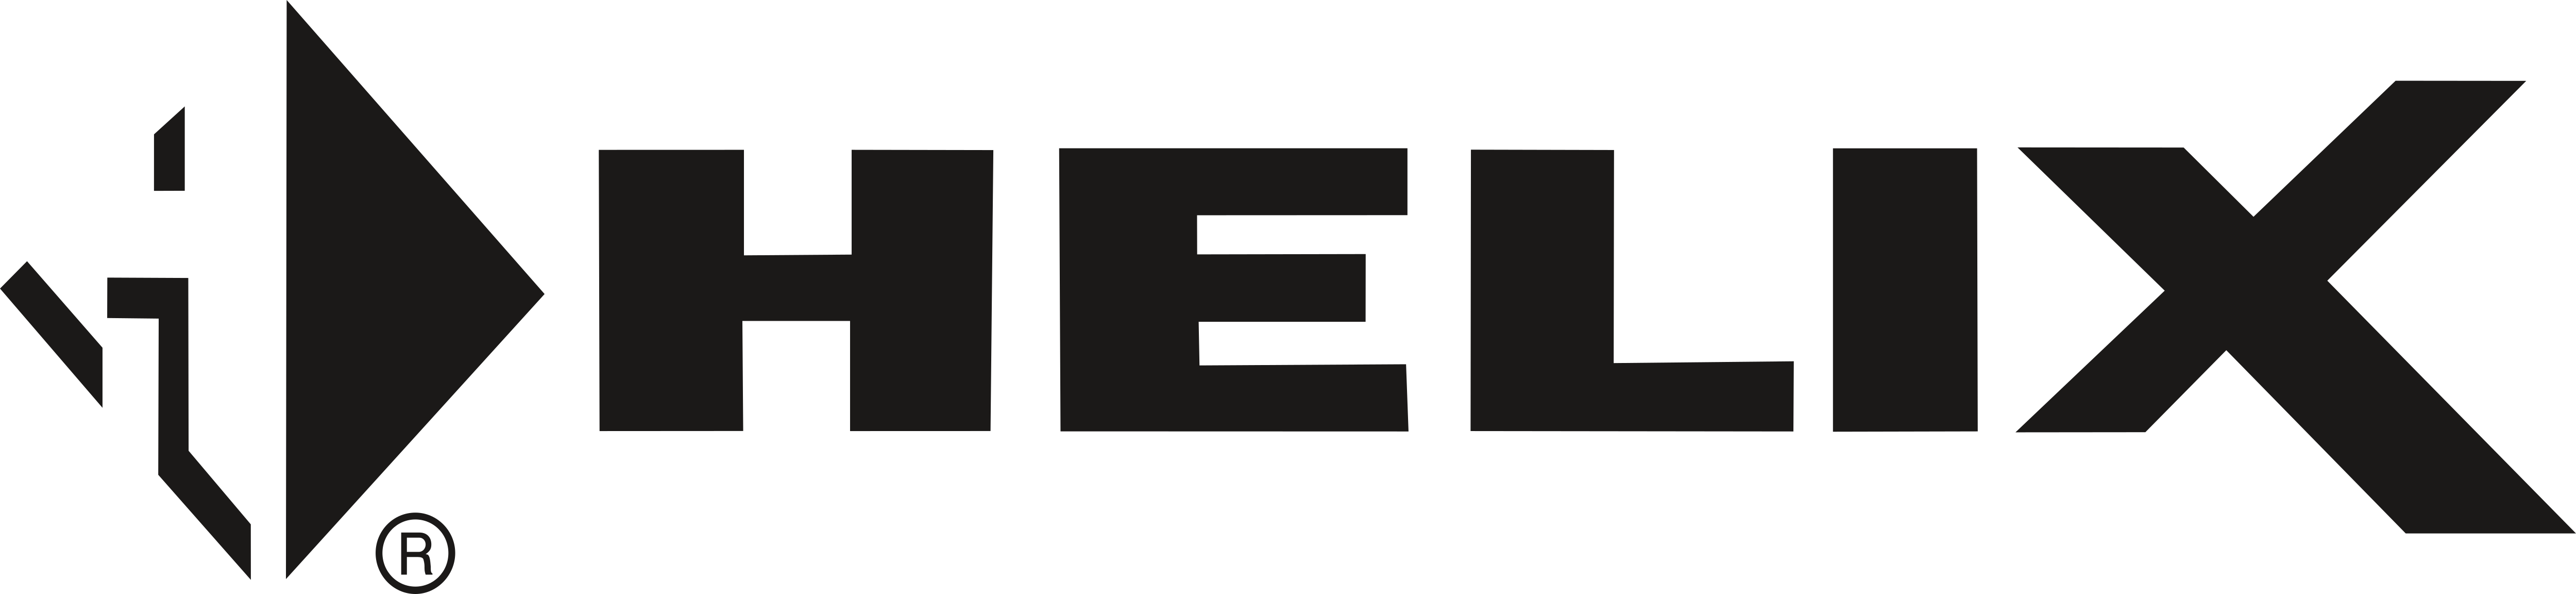 Helix – Logos Download